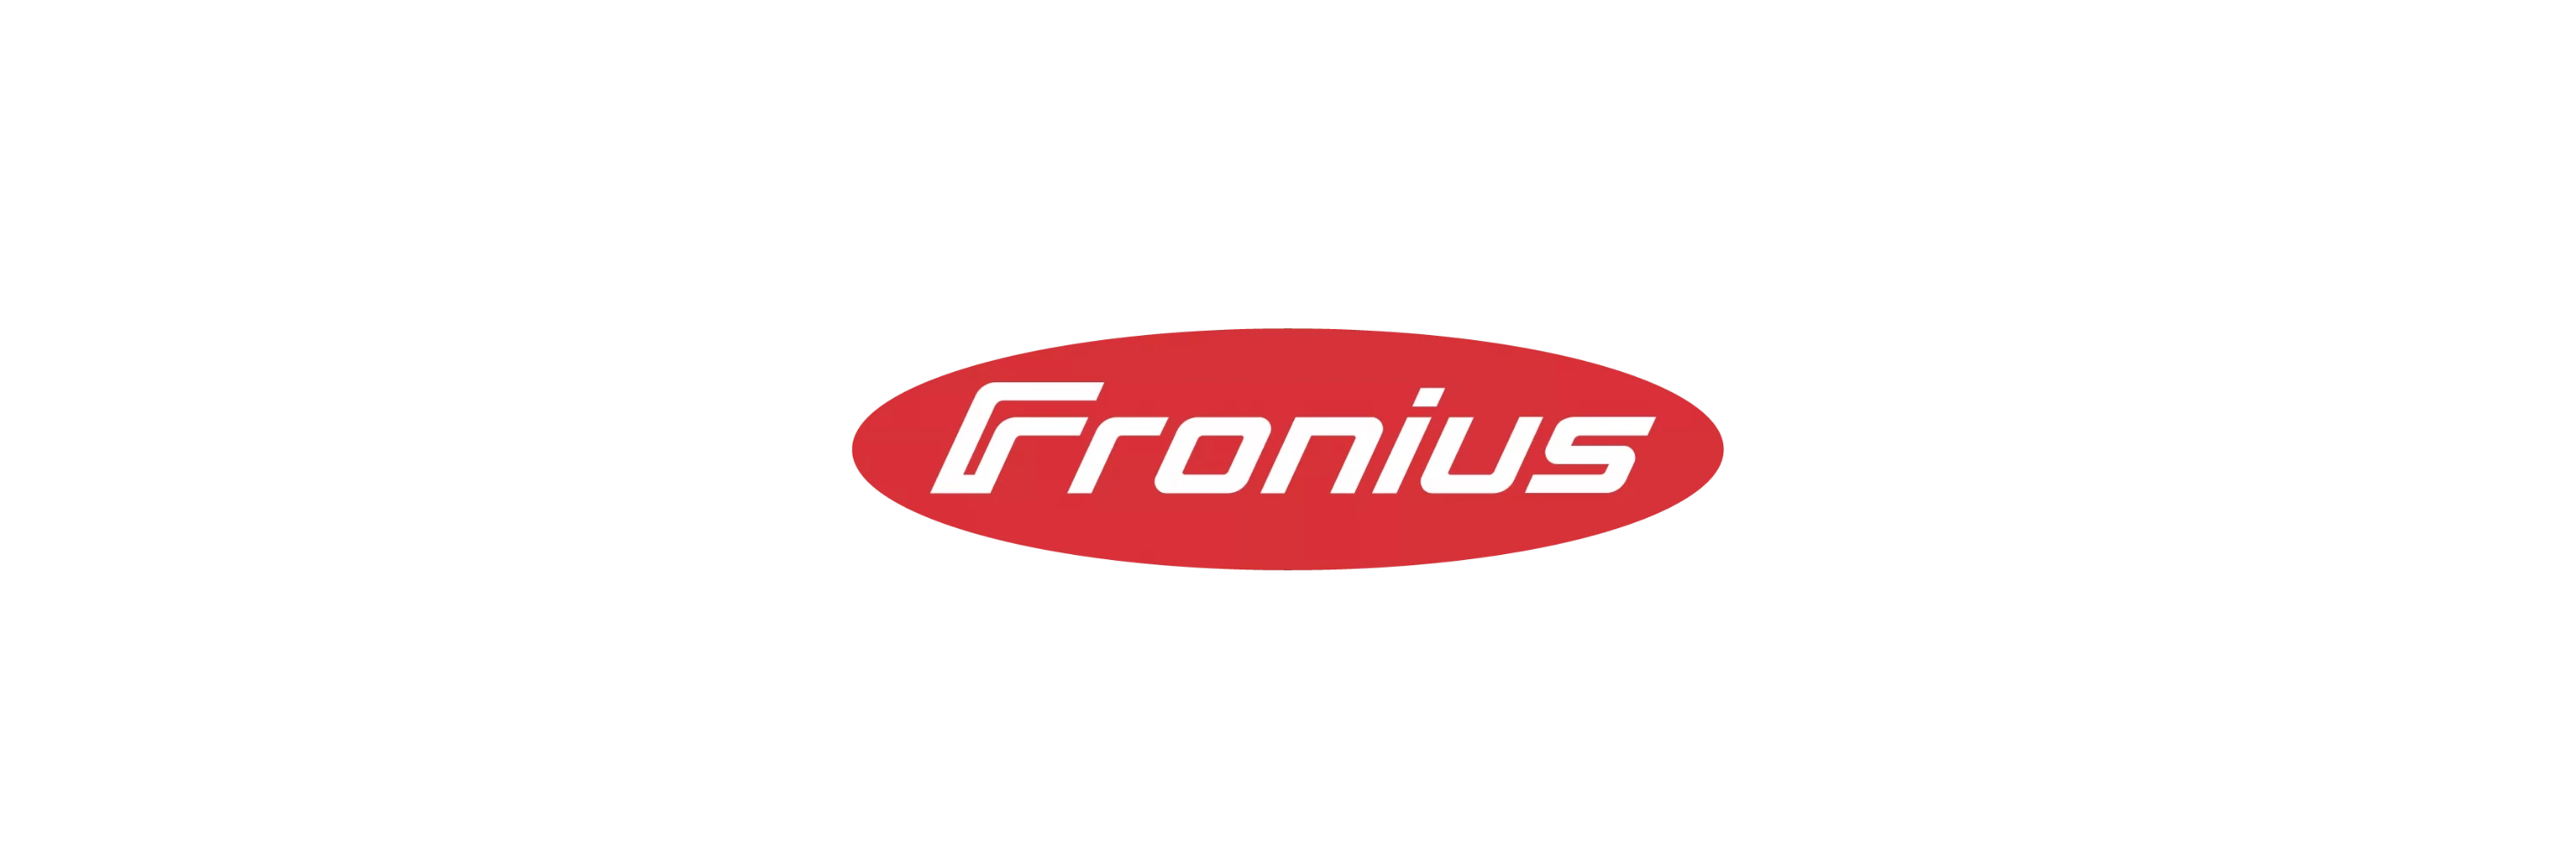 Fronius - Klenk Maschinenhandel